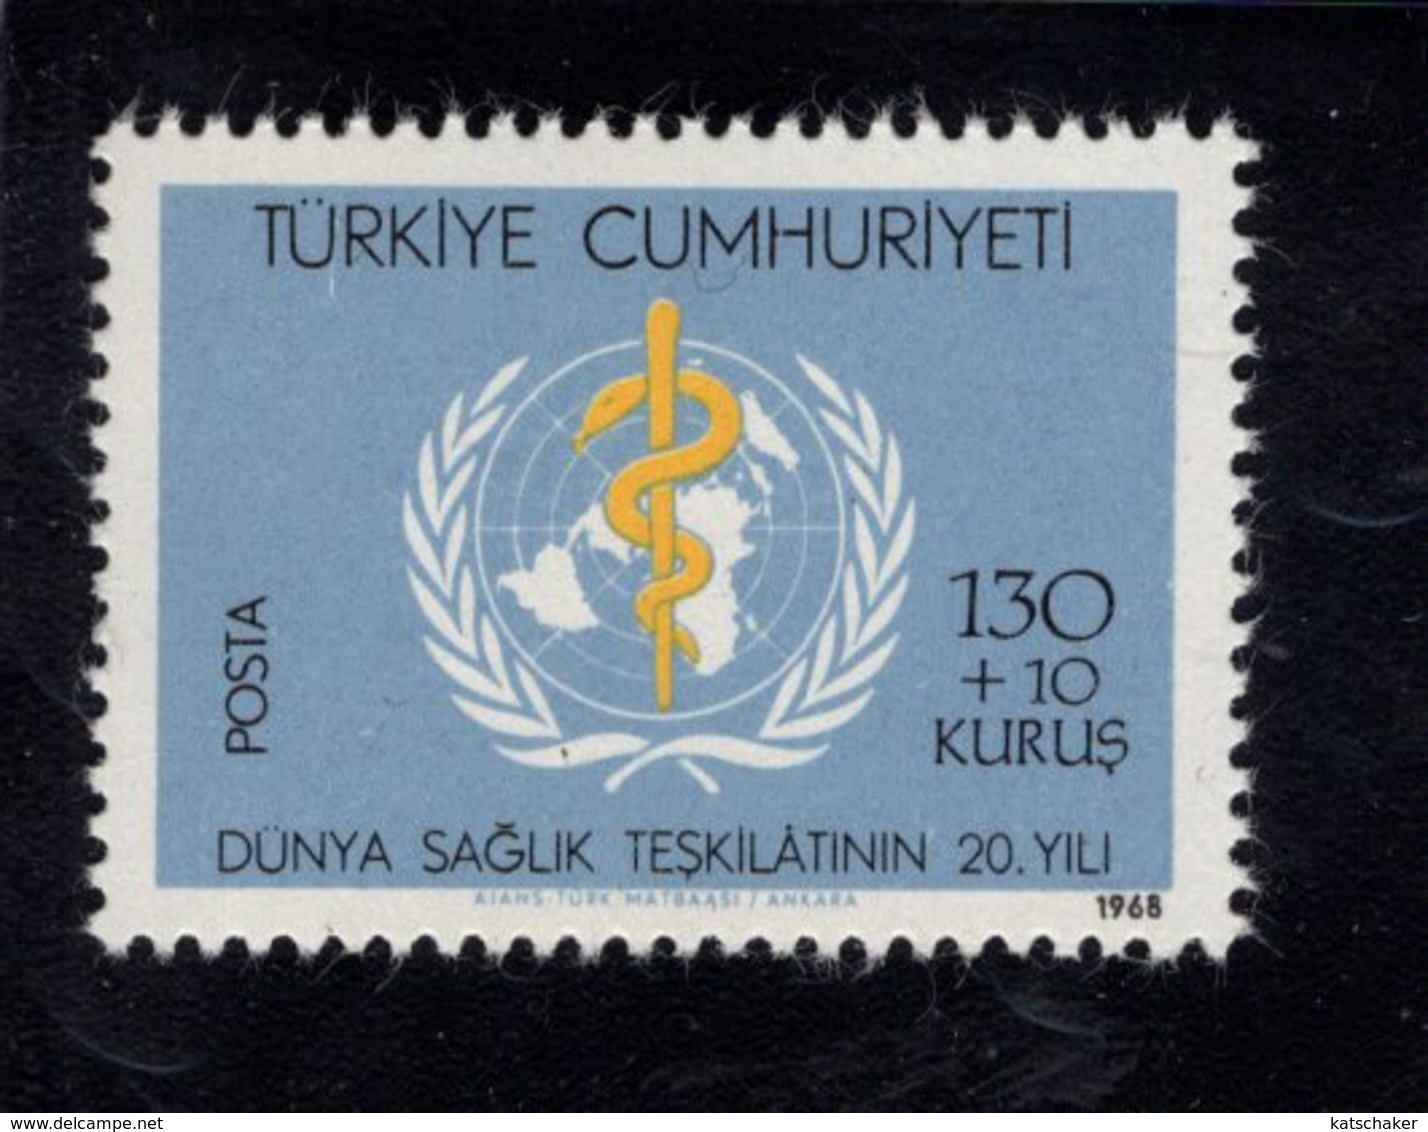 690253873 TURKEY 1968  POSTFRIS MINT NEVER HINGED POSTFRISCH EINWANDFREI SCOTT B124 WHO 20TH ANNIVERSARY - Neufs